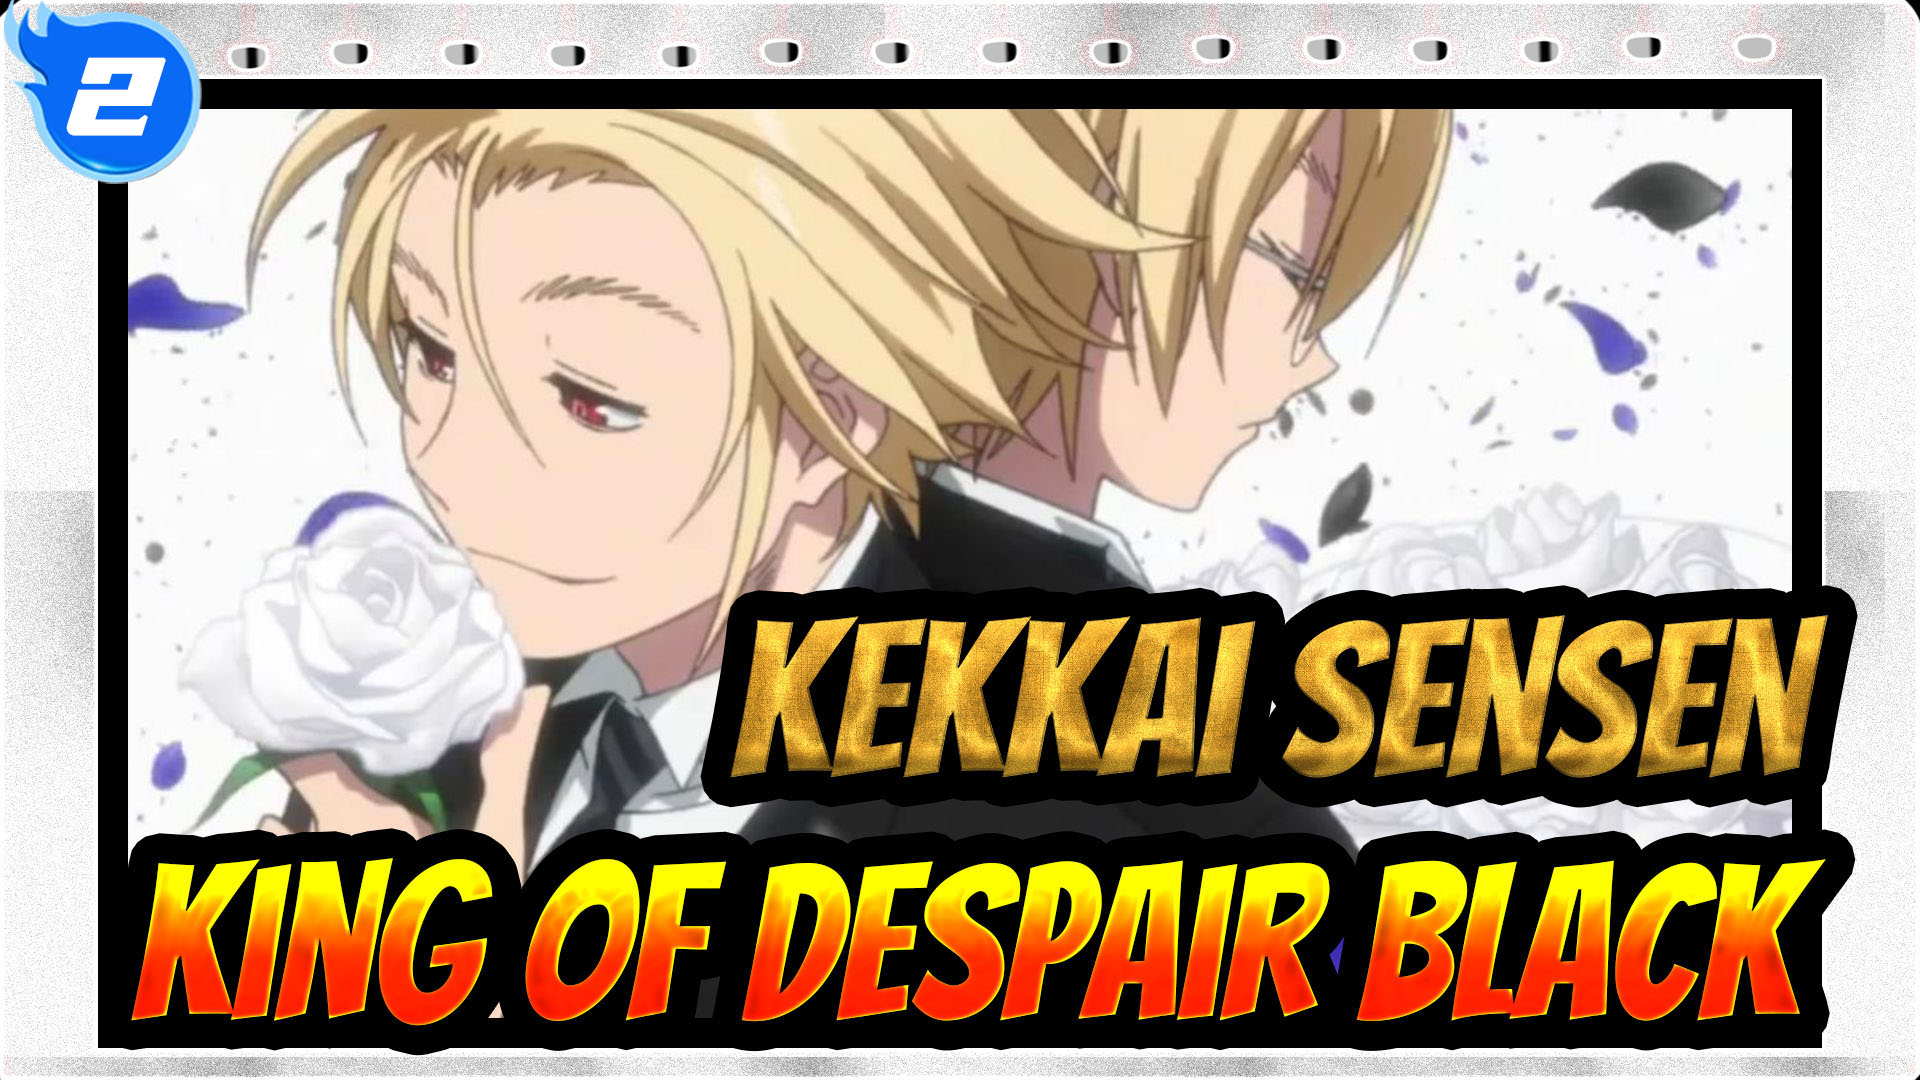 Kekkai Sensen Anime Airs 2015 + Cast, Staff, Visual & Promotional Video  Revealed - Otaku Tale